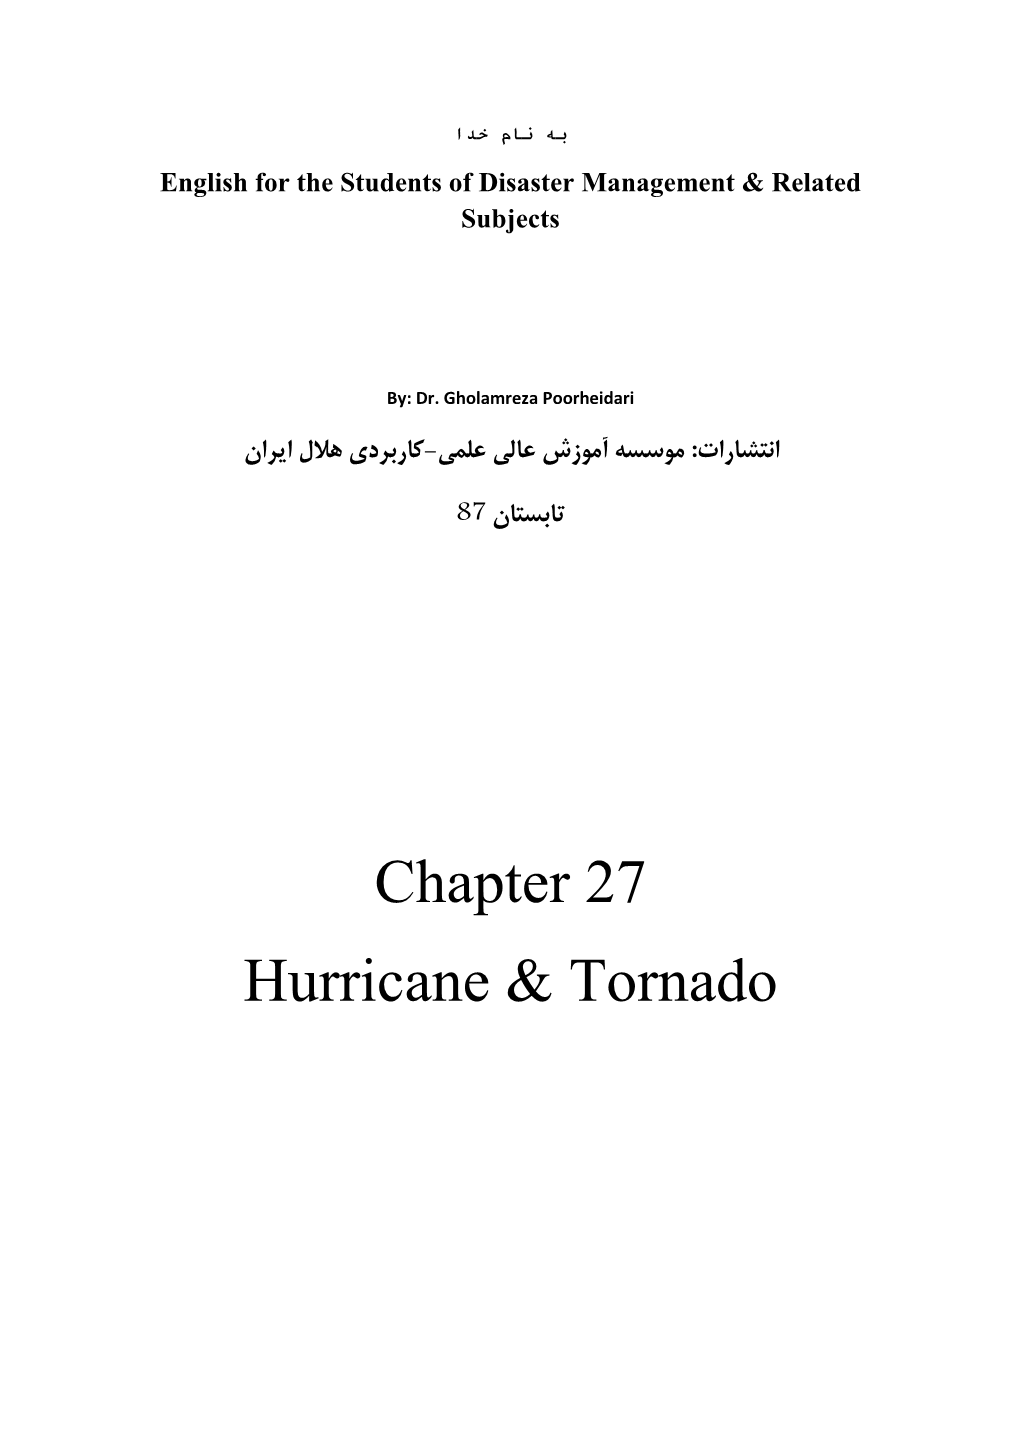 ESDM-Chapter27-Hurricane & Tornado